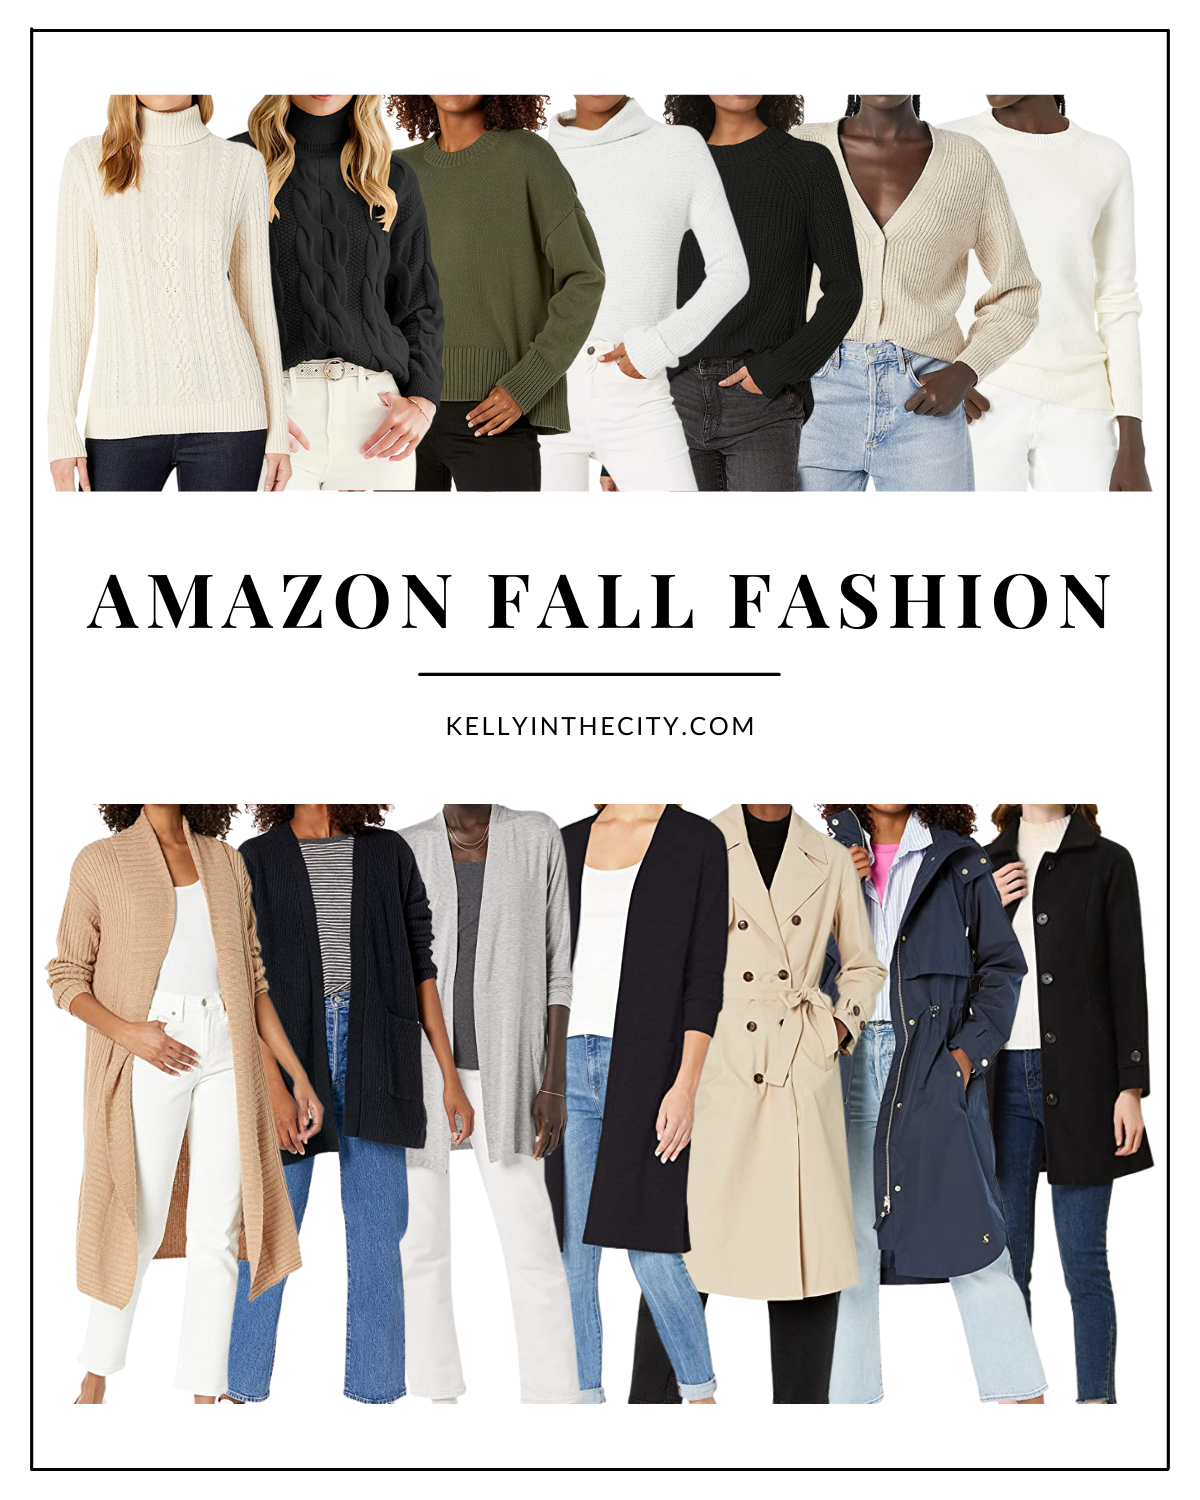 Amazon Fall Fashion 9/3